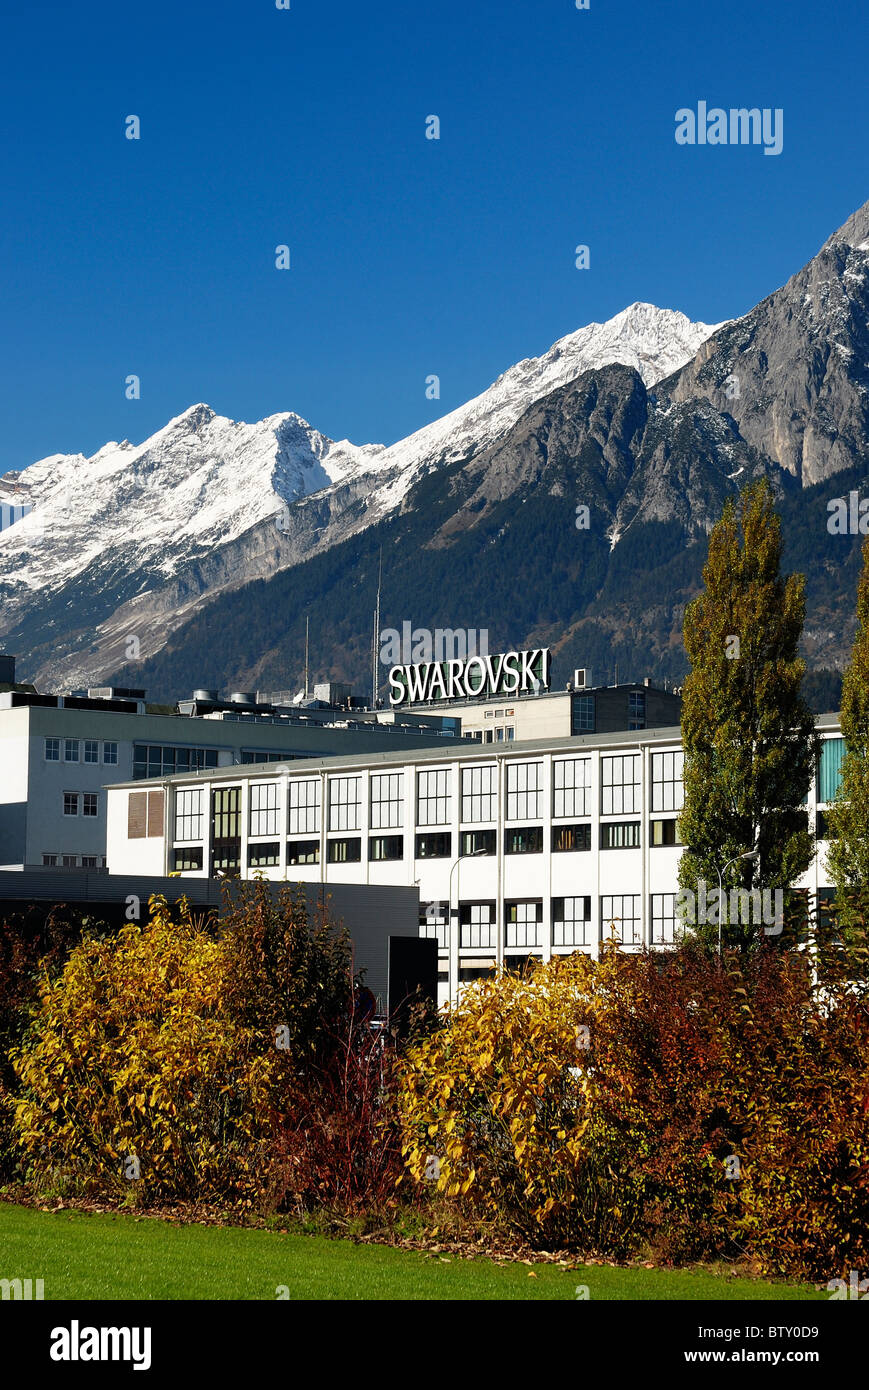 Mondi di Cristallo Swarovski wattens Tirol Austria kristallwelten Foto Stock